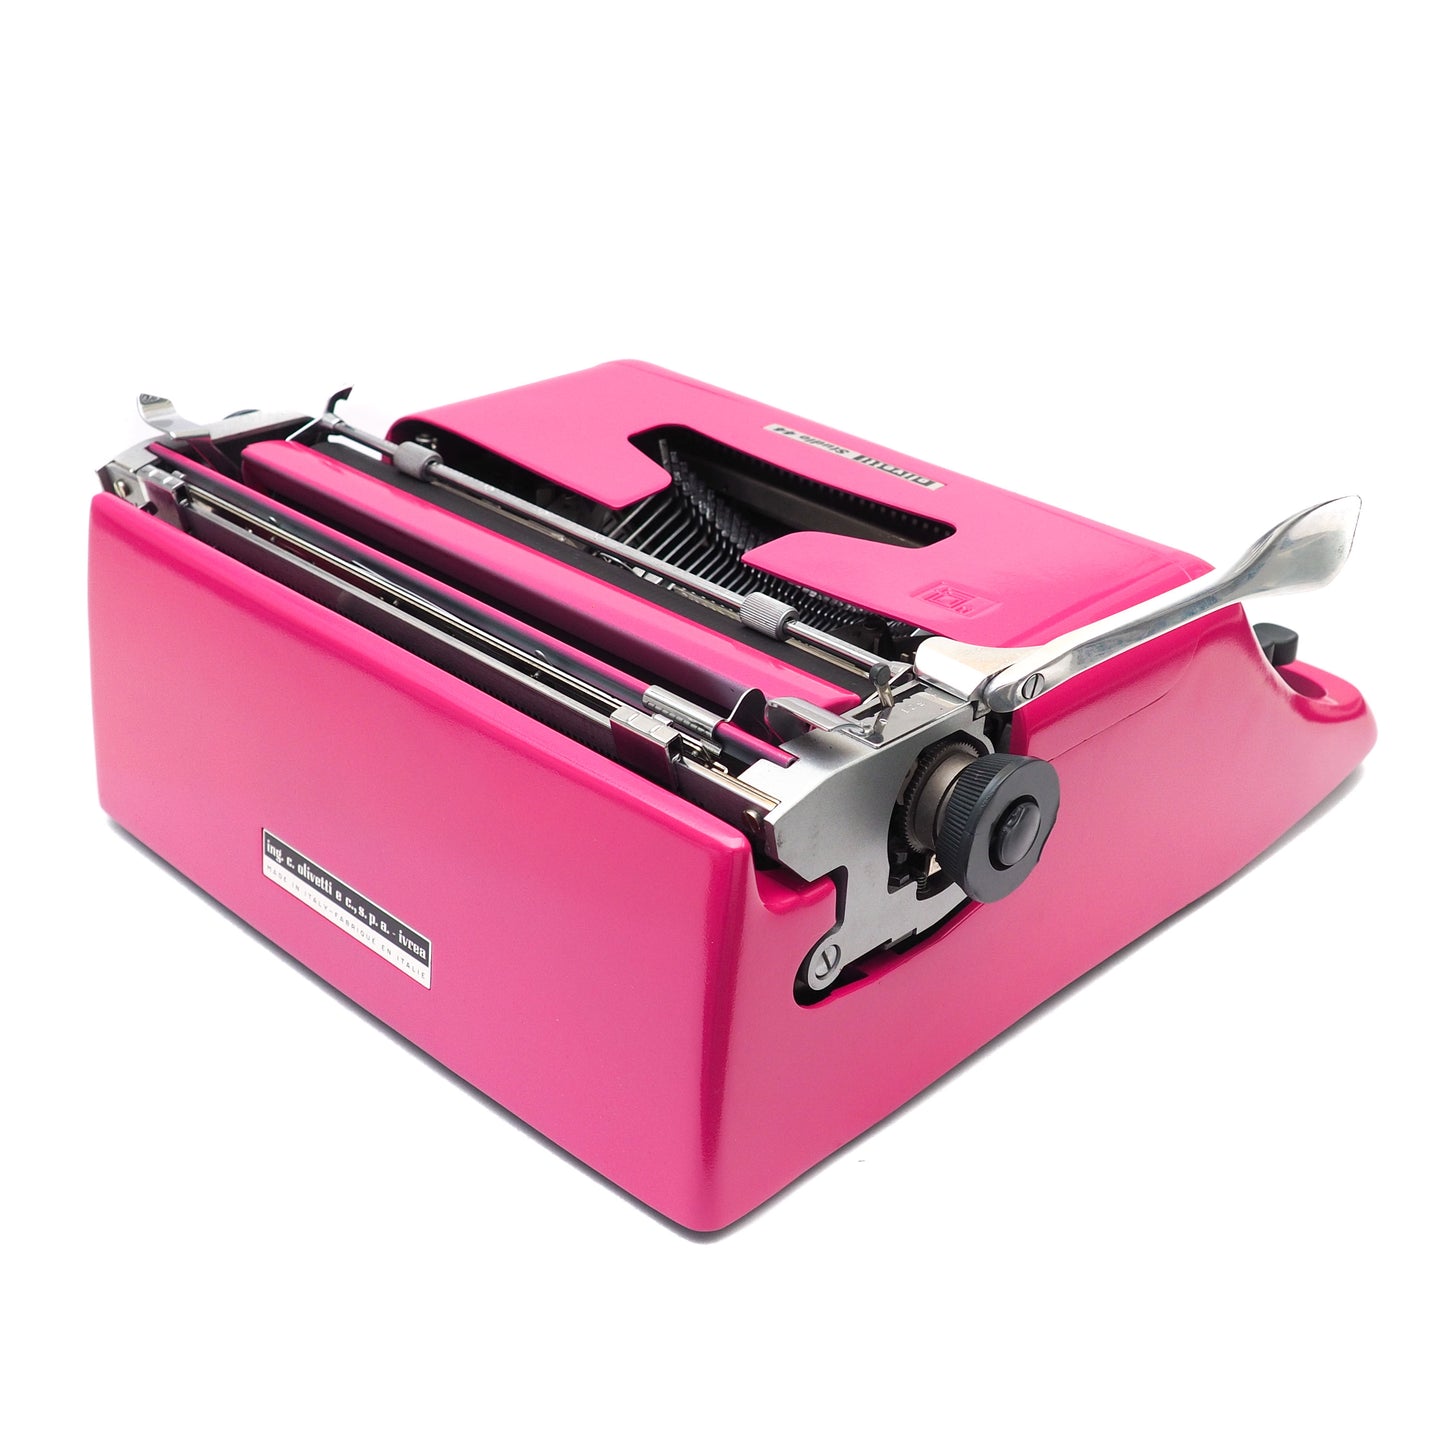 Pink Typewriter Olivetti Studio 44